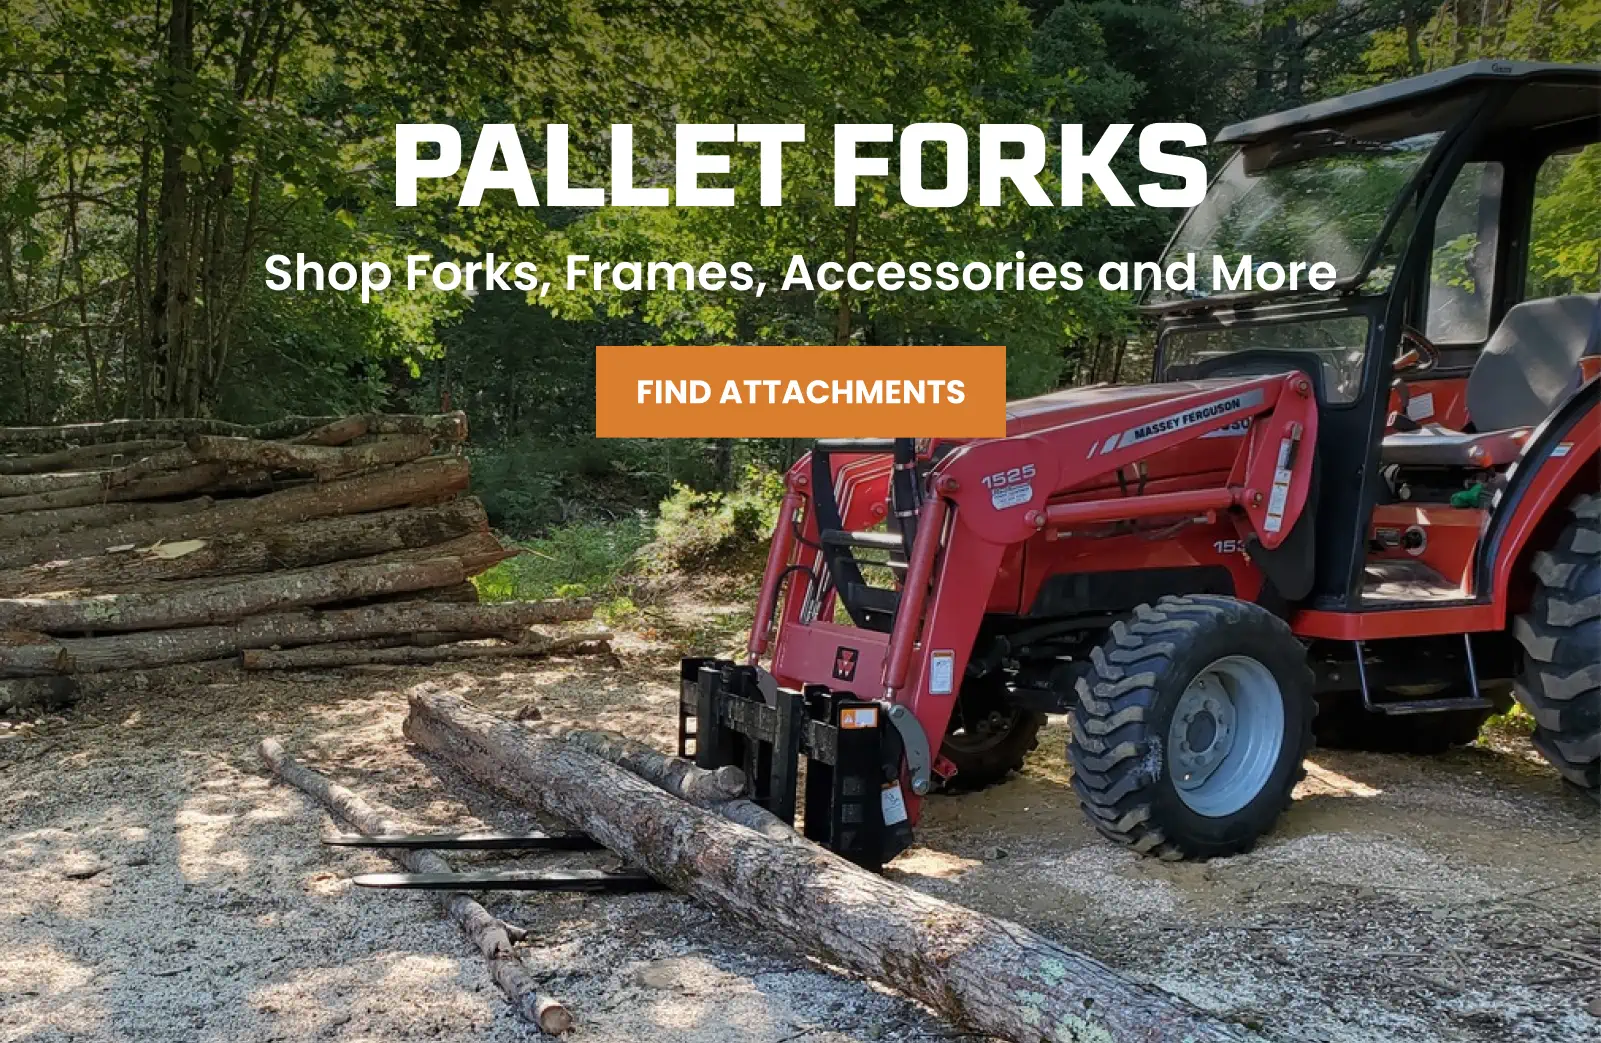 Promotion - Pallet Forks. Shop Forks, Frames, Accessories and More. Find Attachments.